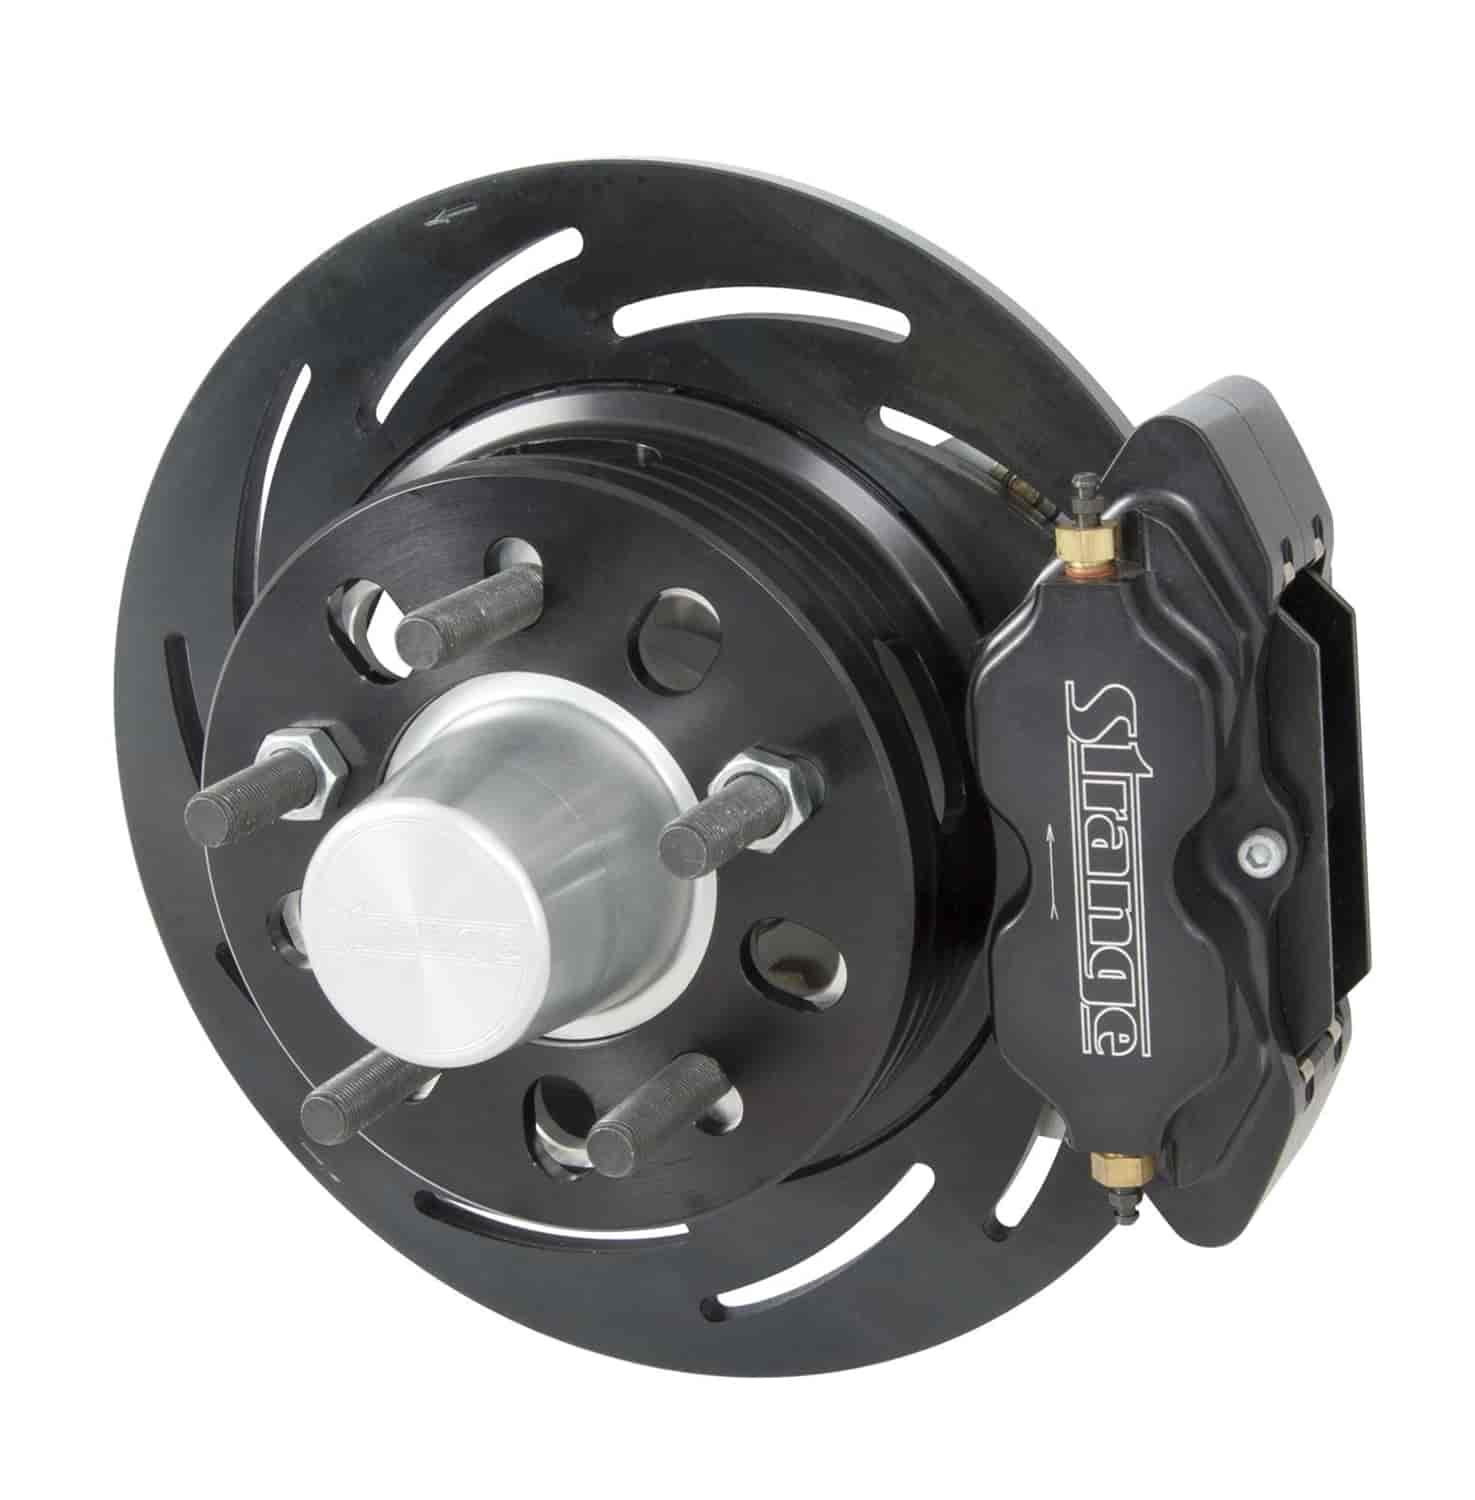 Front brake kit /GM disc spindles /4.75 bc /2 pc rotor